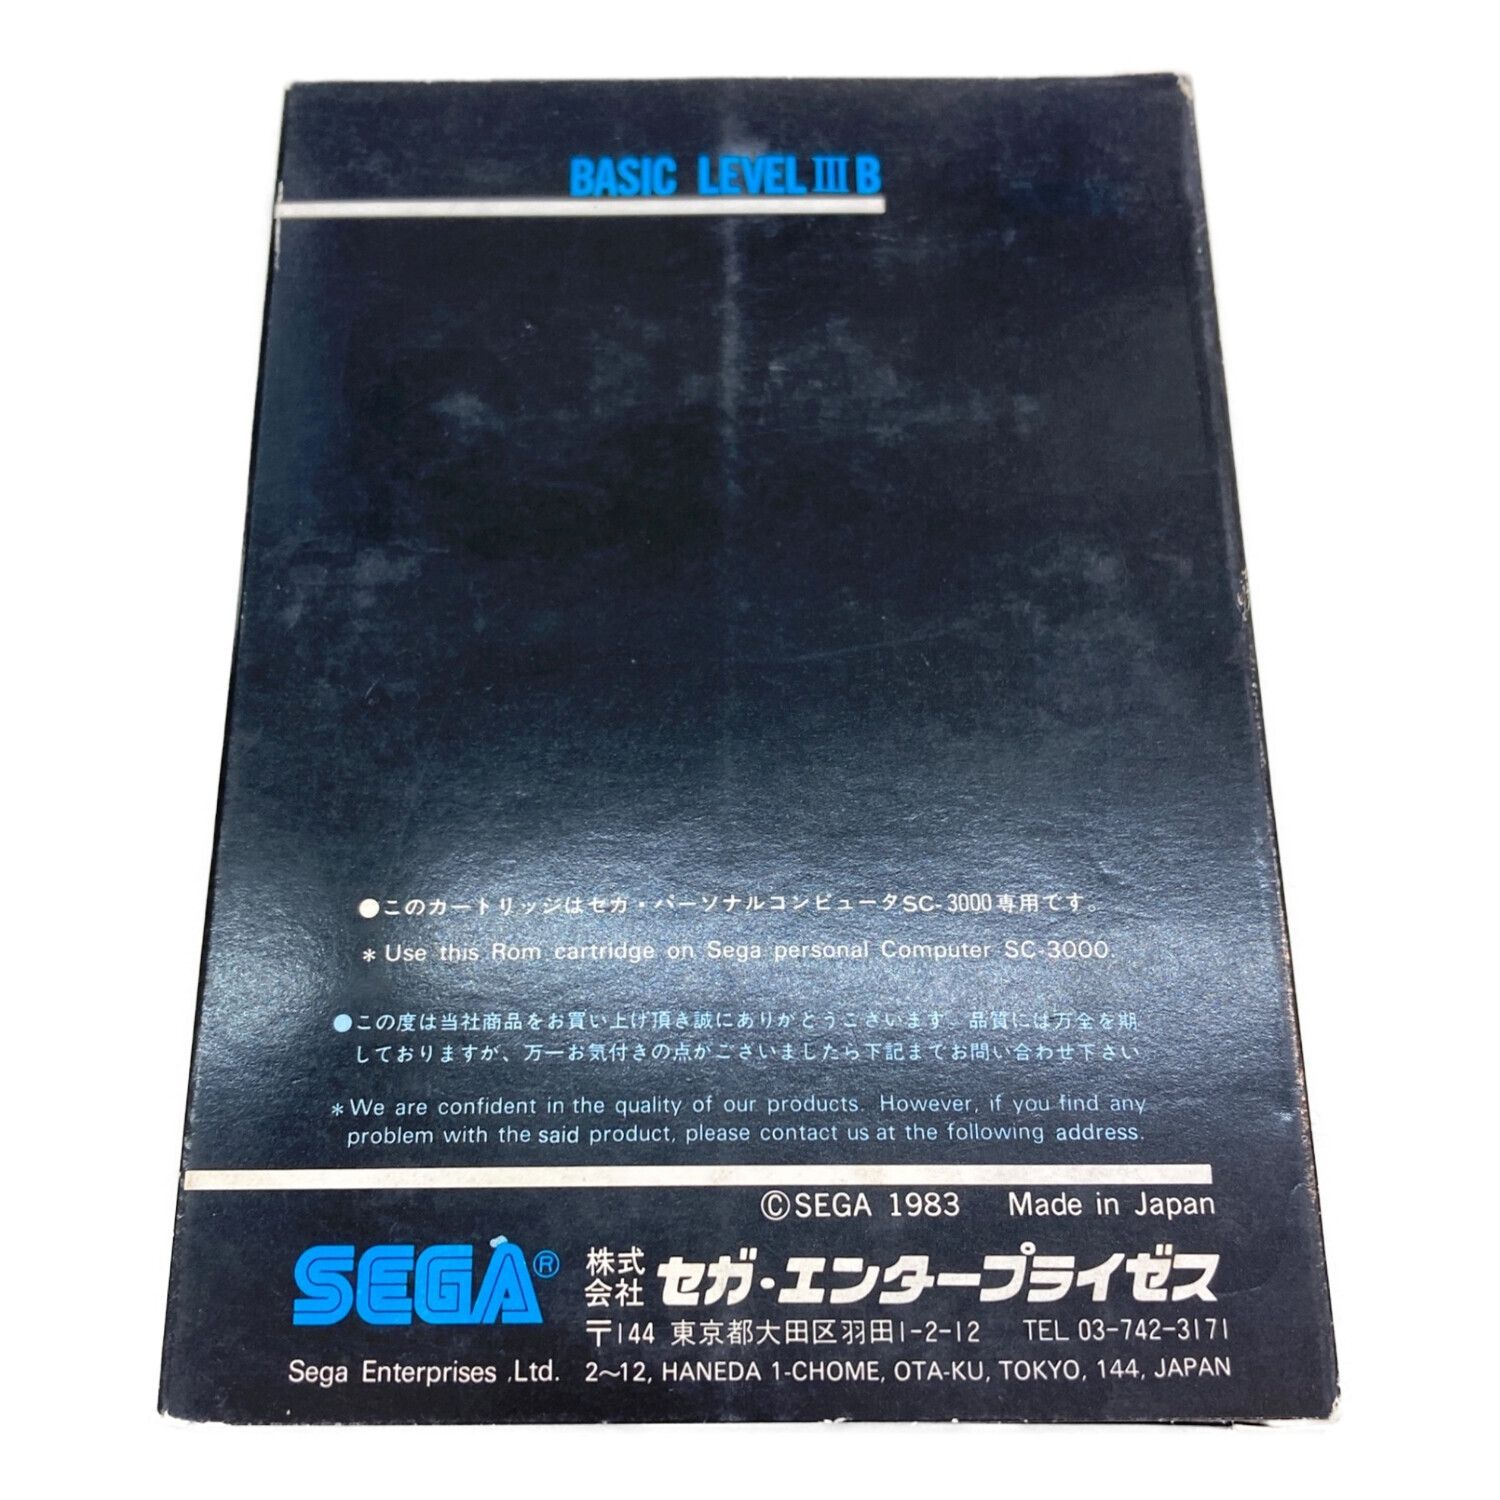 BASIC LEVEL III B SEGA SC-3000専用ソフト 箱付 説明書欠品 箱 